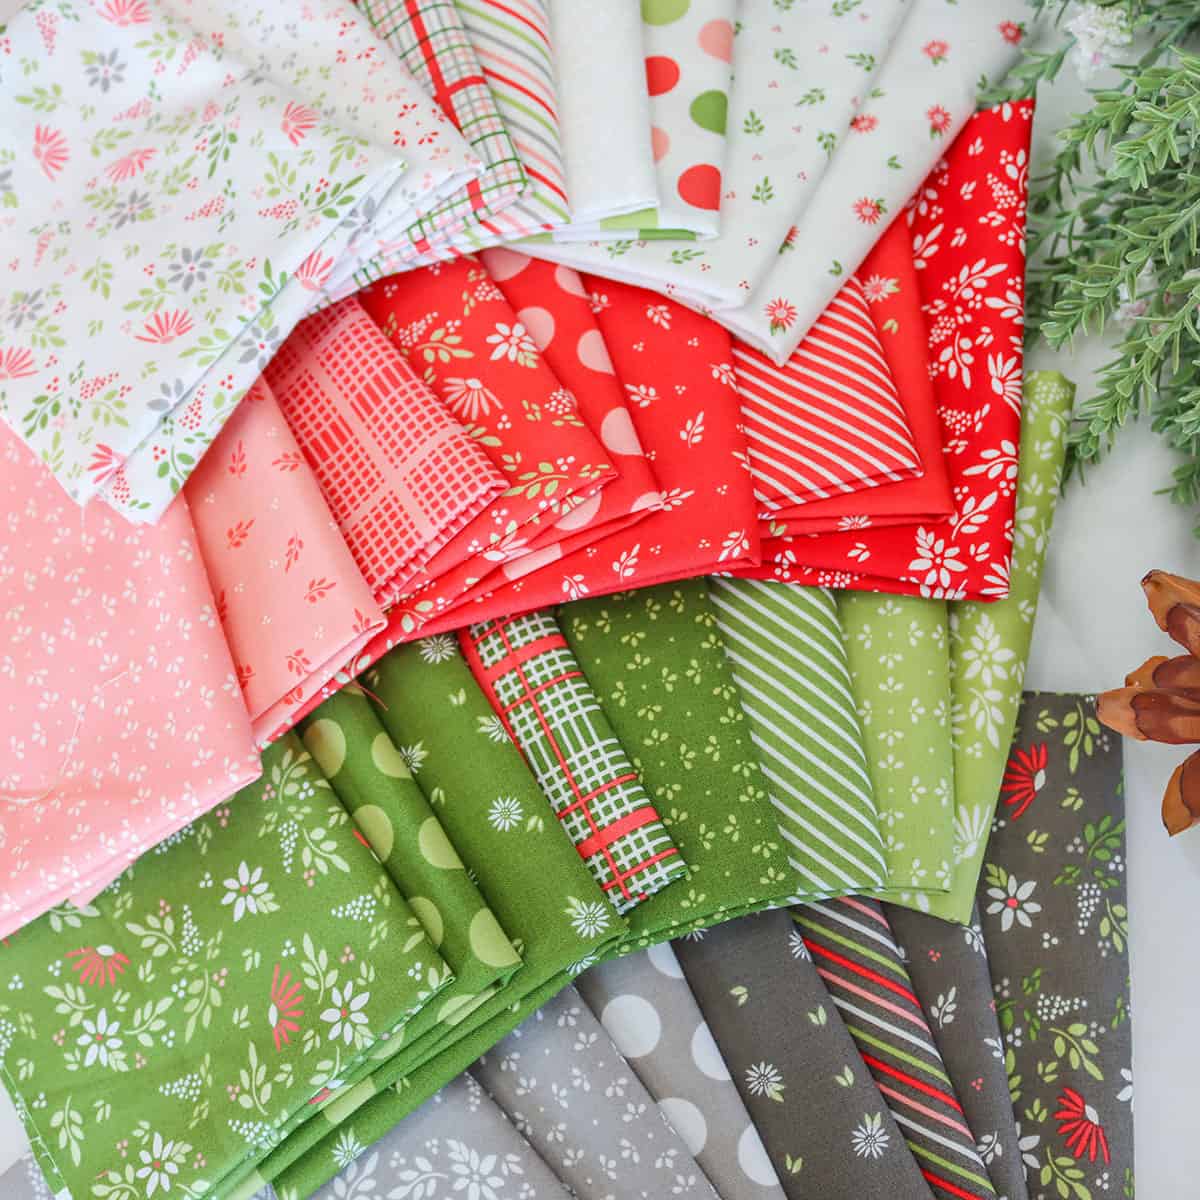 Favorite Things Christmas fabrics by Sherri & Chelsi for Moda Fabrics